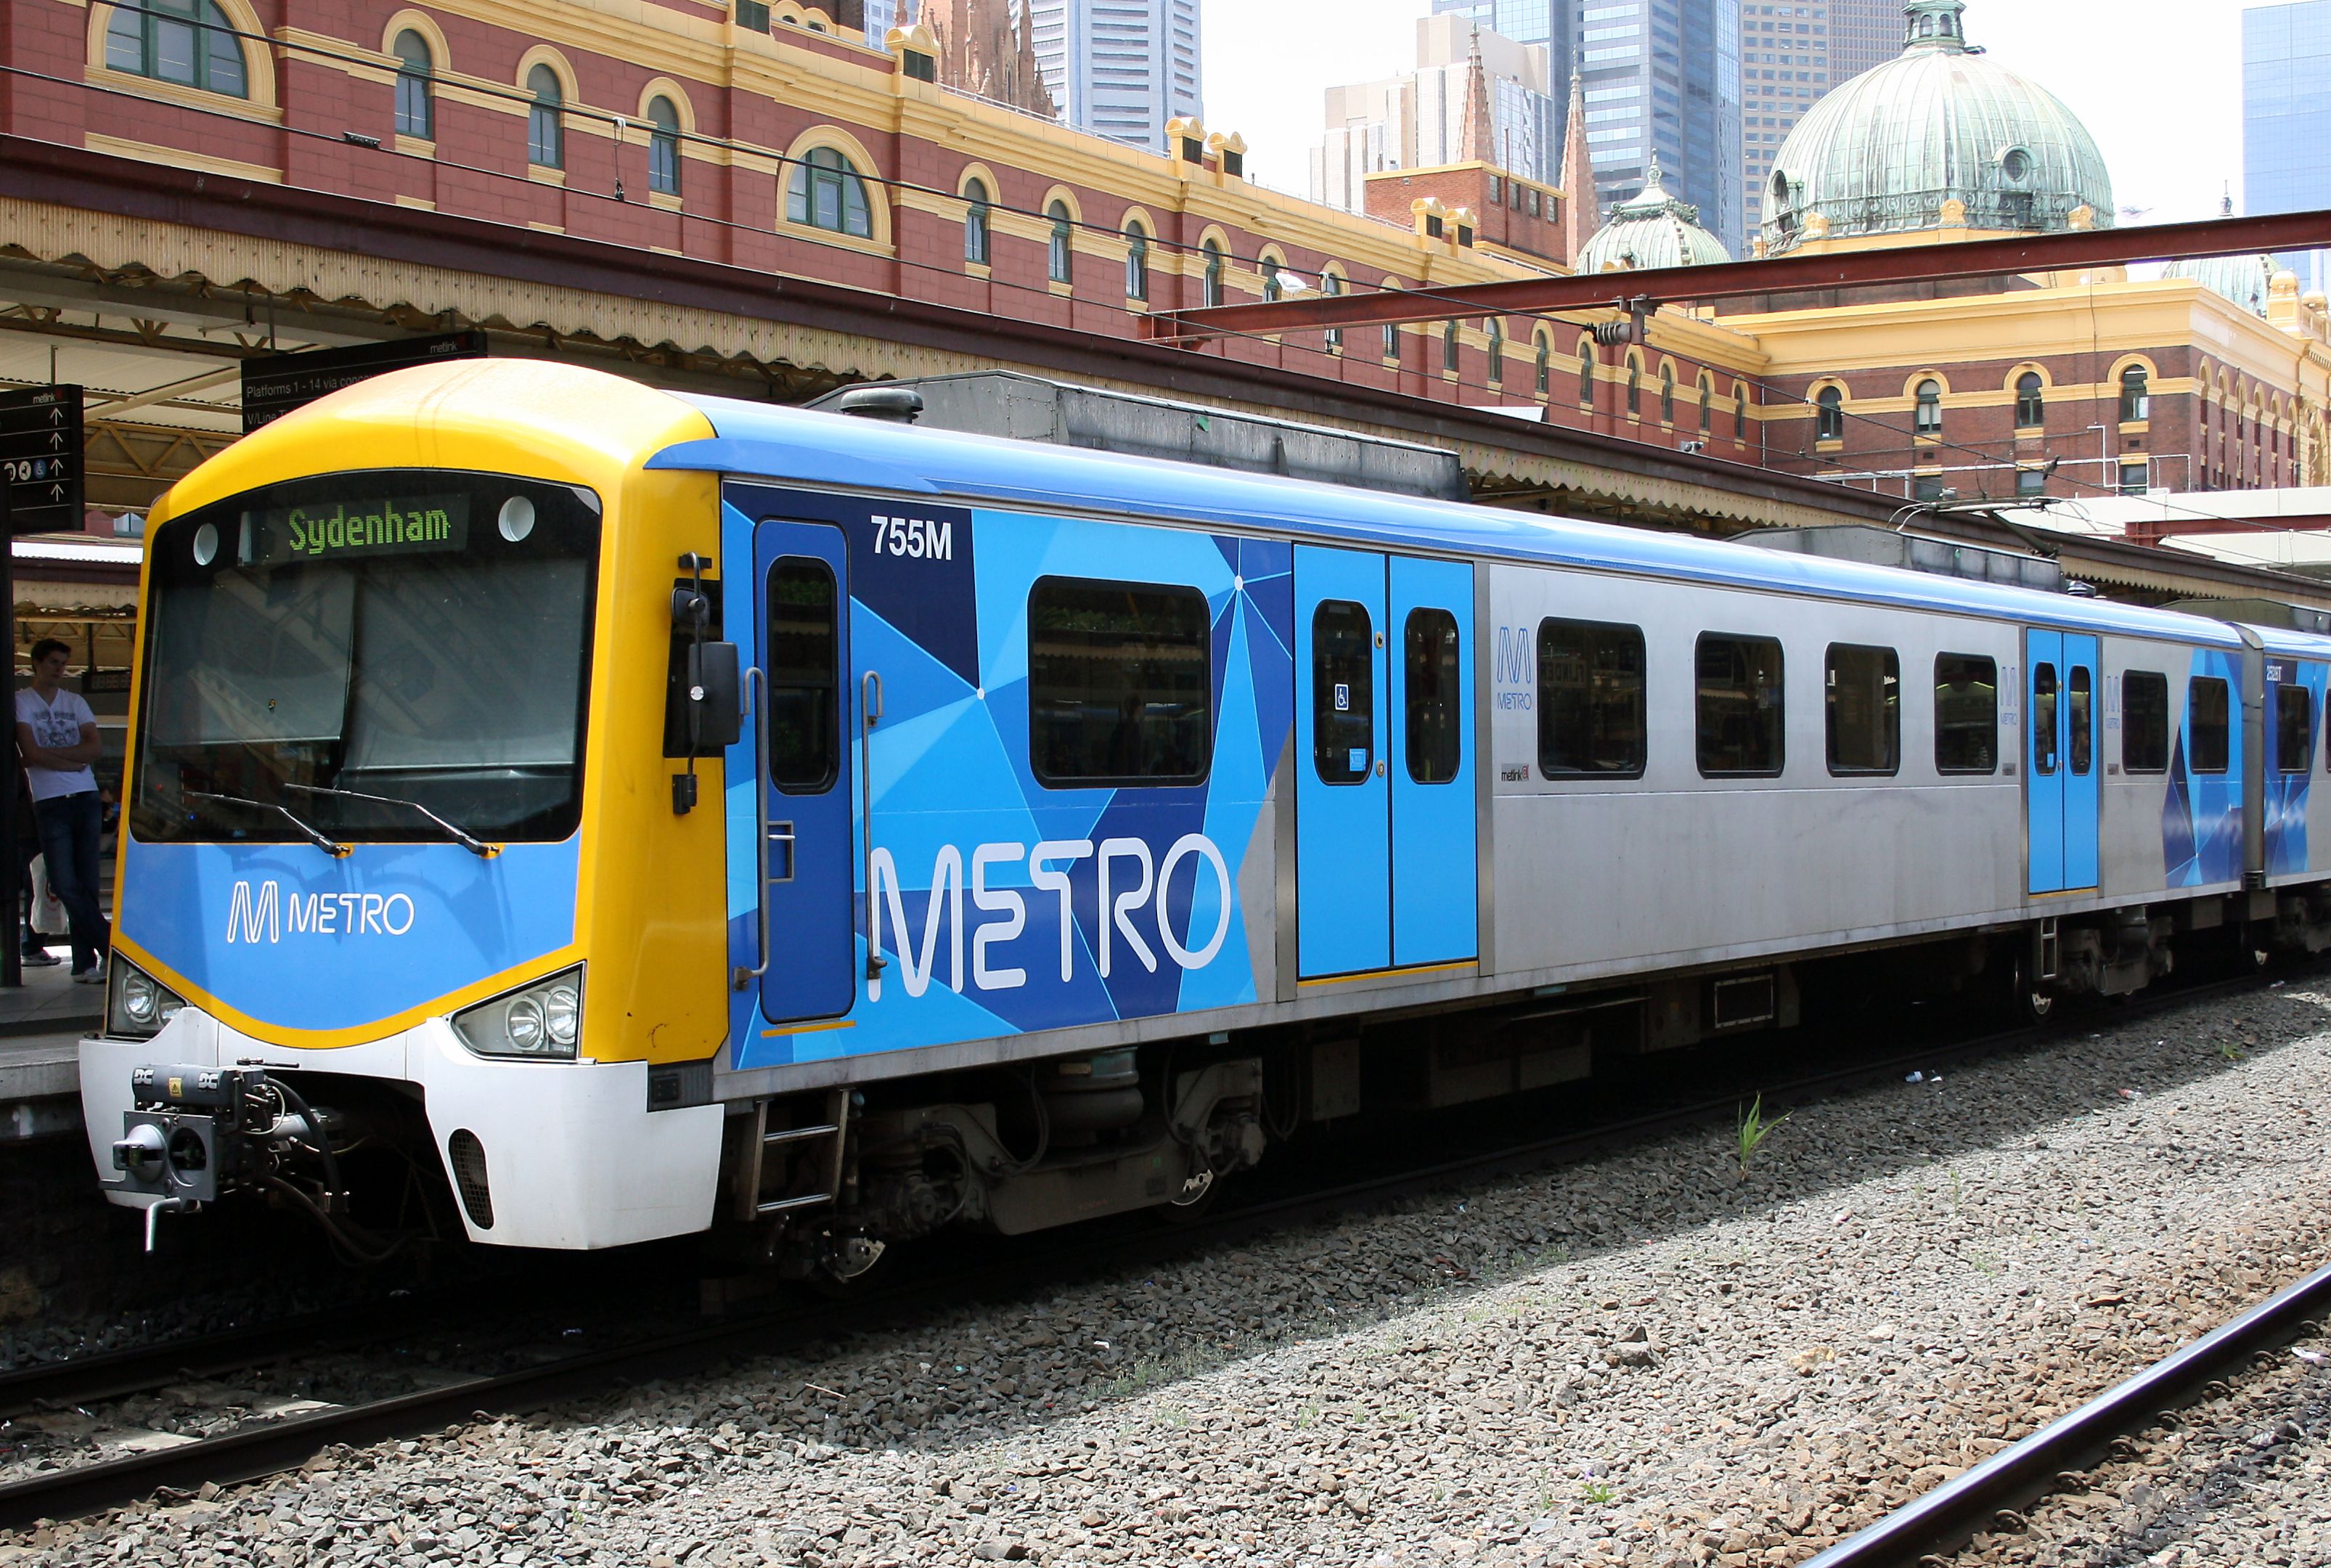 Siemens train in Metro Trains Melbourne Australia